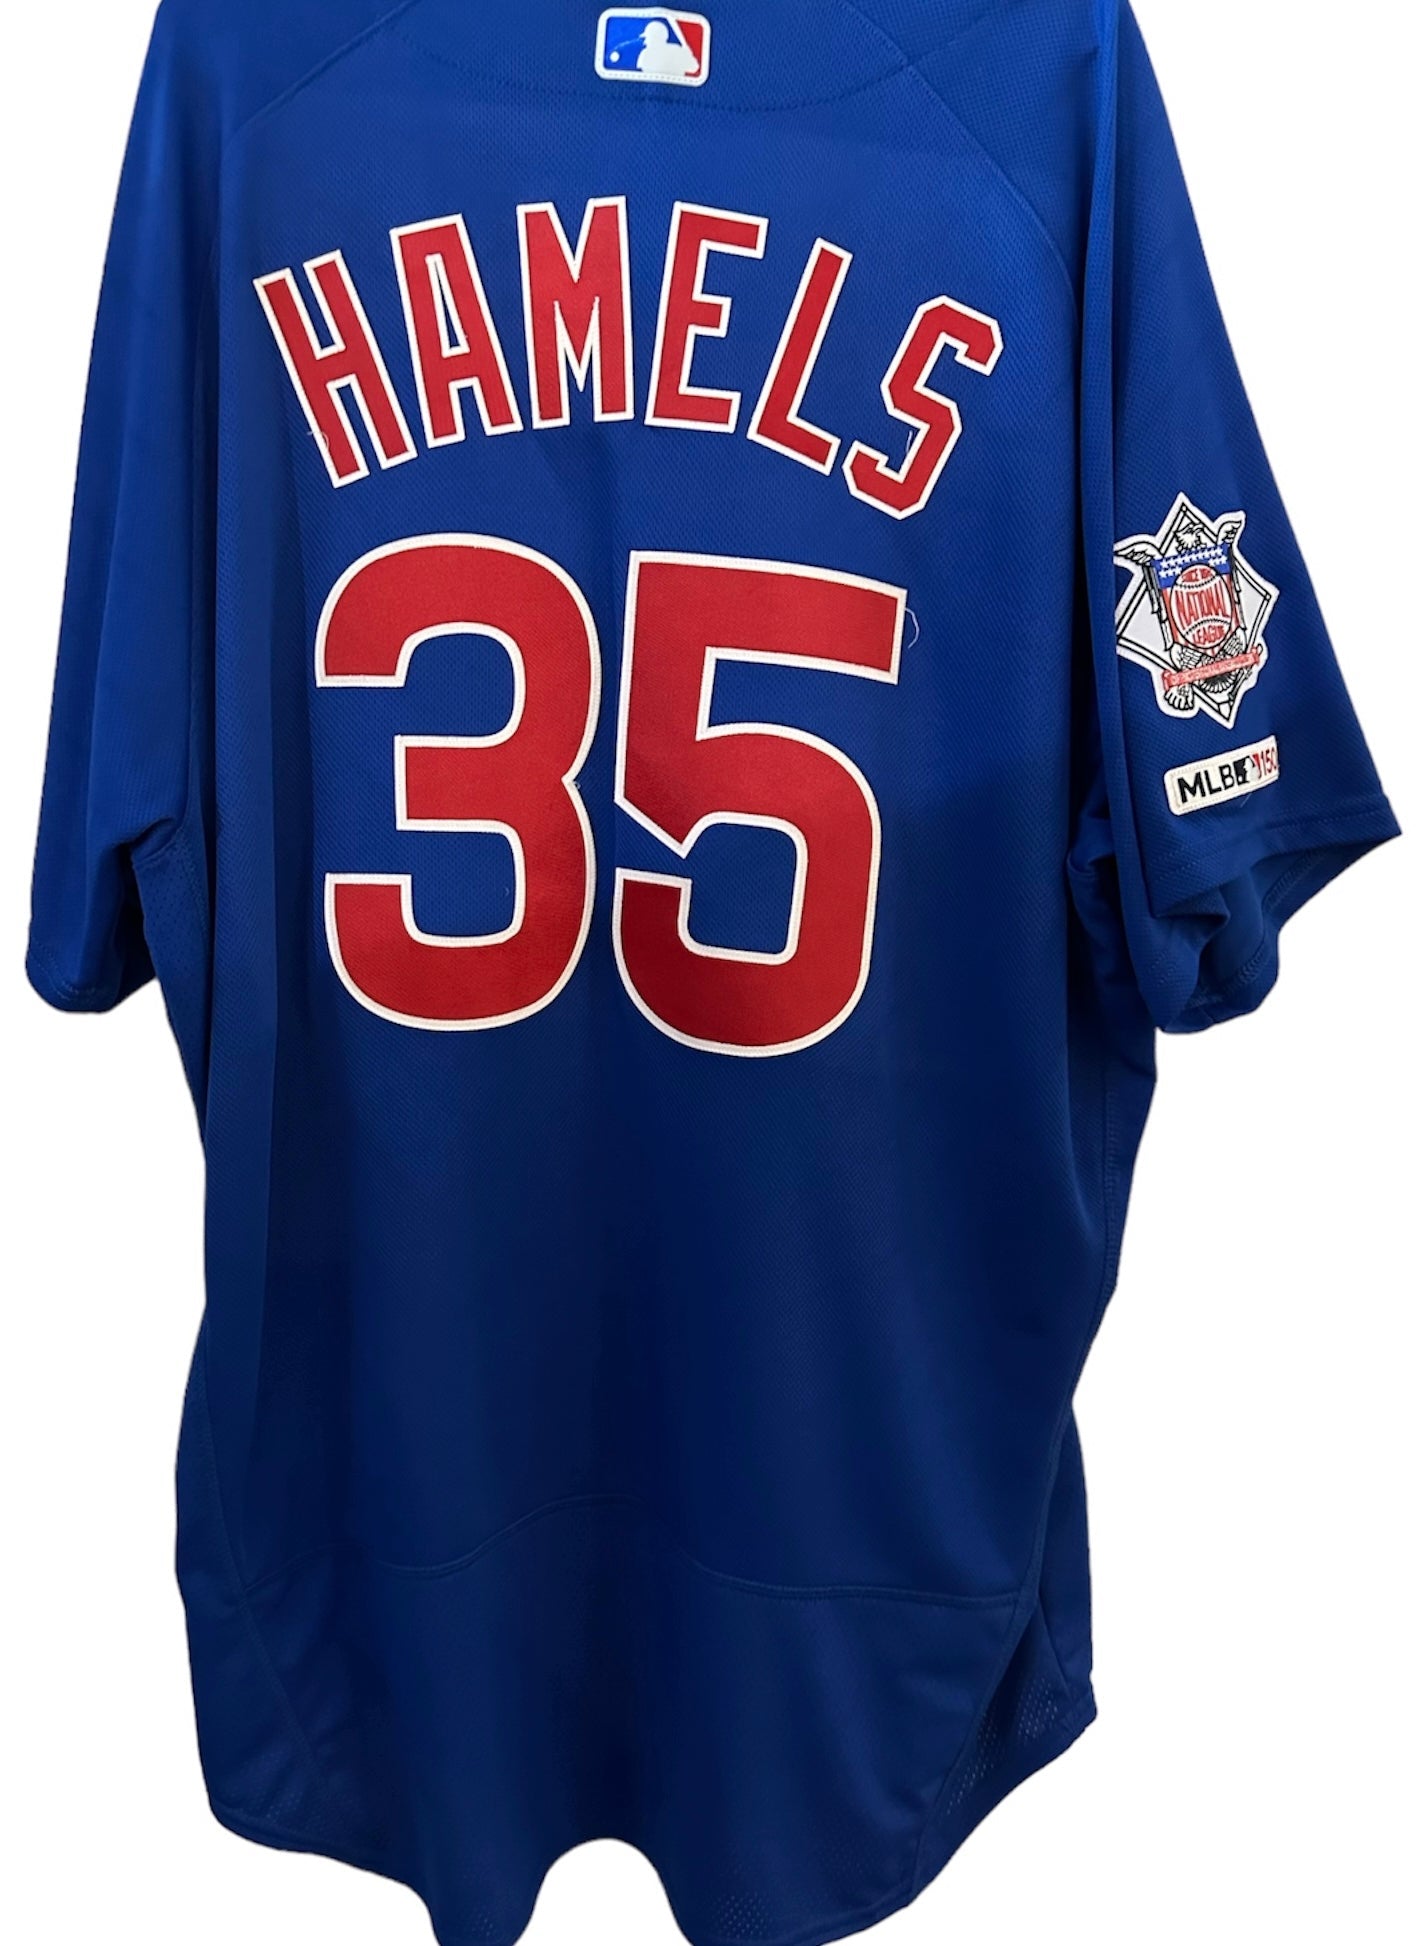 Cole Hamels Cubs Jersey